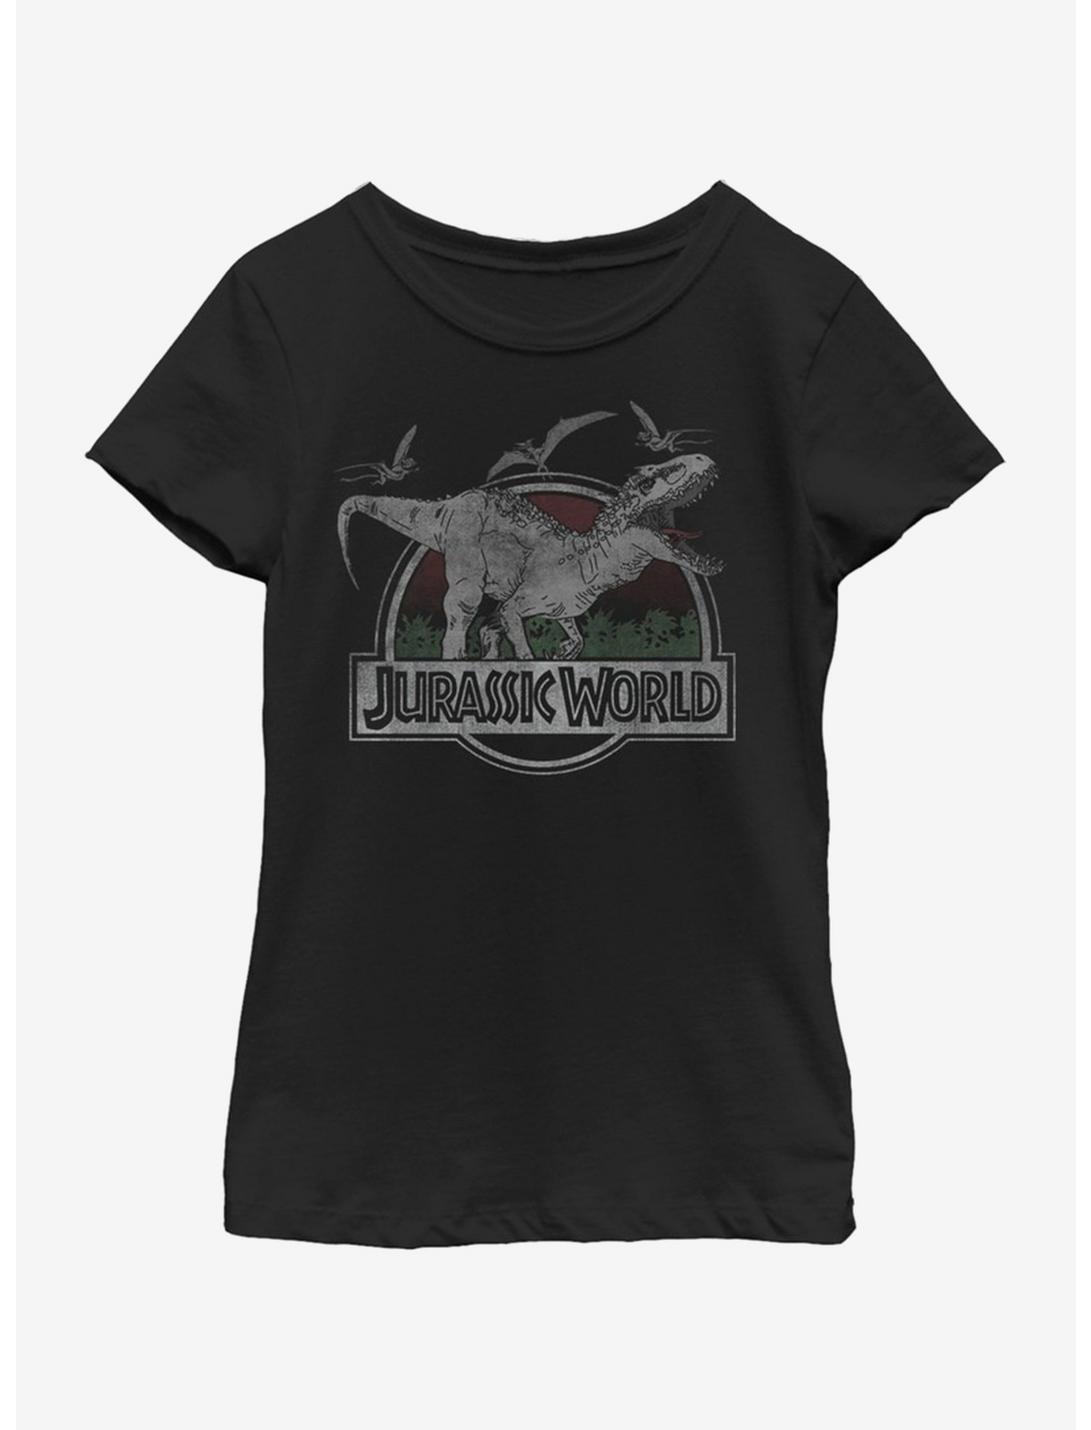 Jurassic Park Fight or Flight Youth Girls T-Shirt, BLACK, hi-res